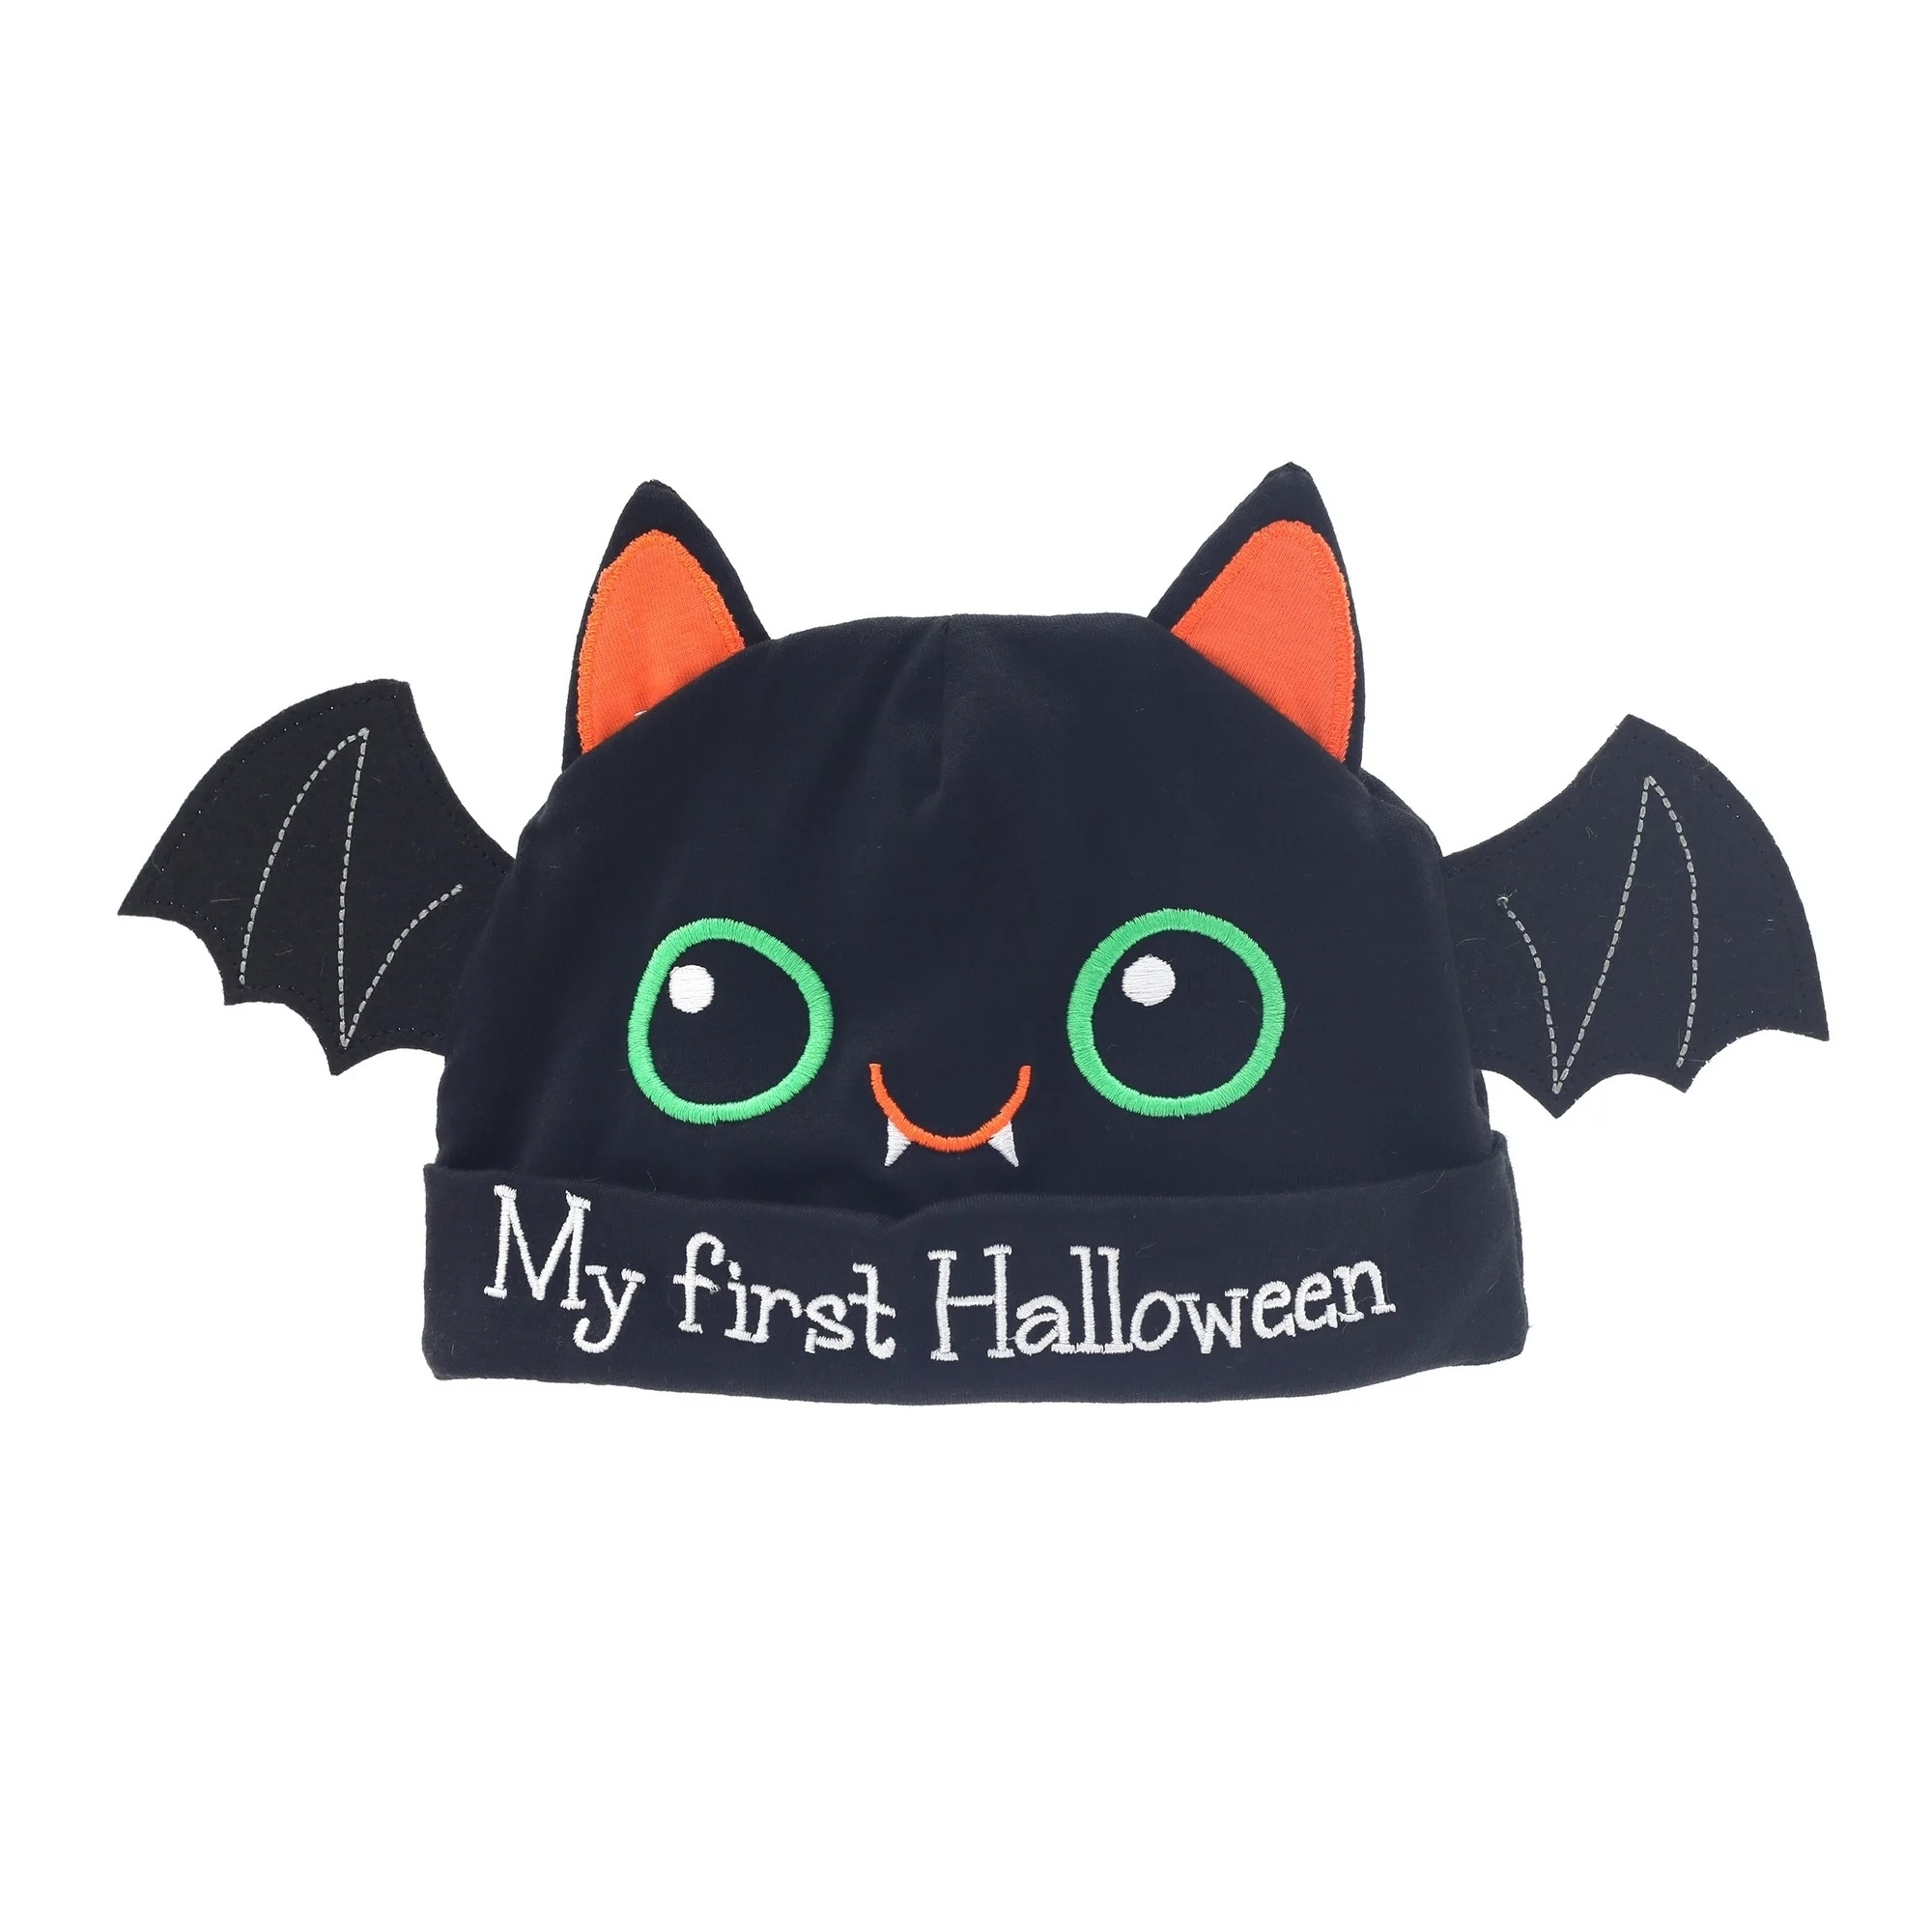 a bat shaped my first halloween hat